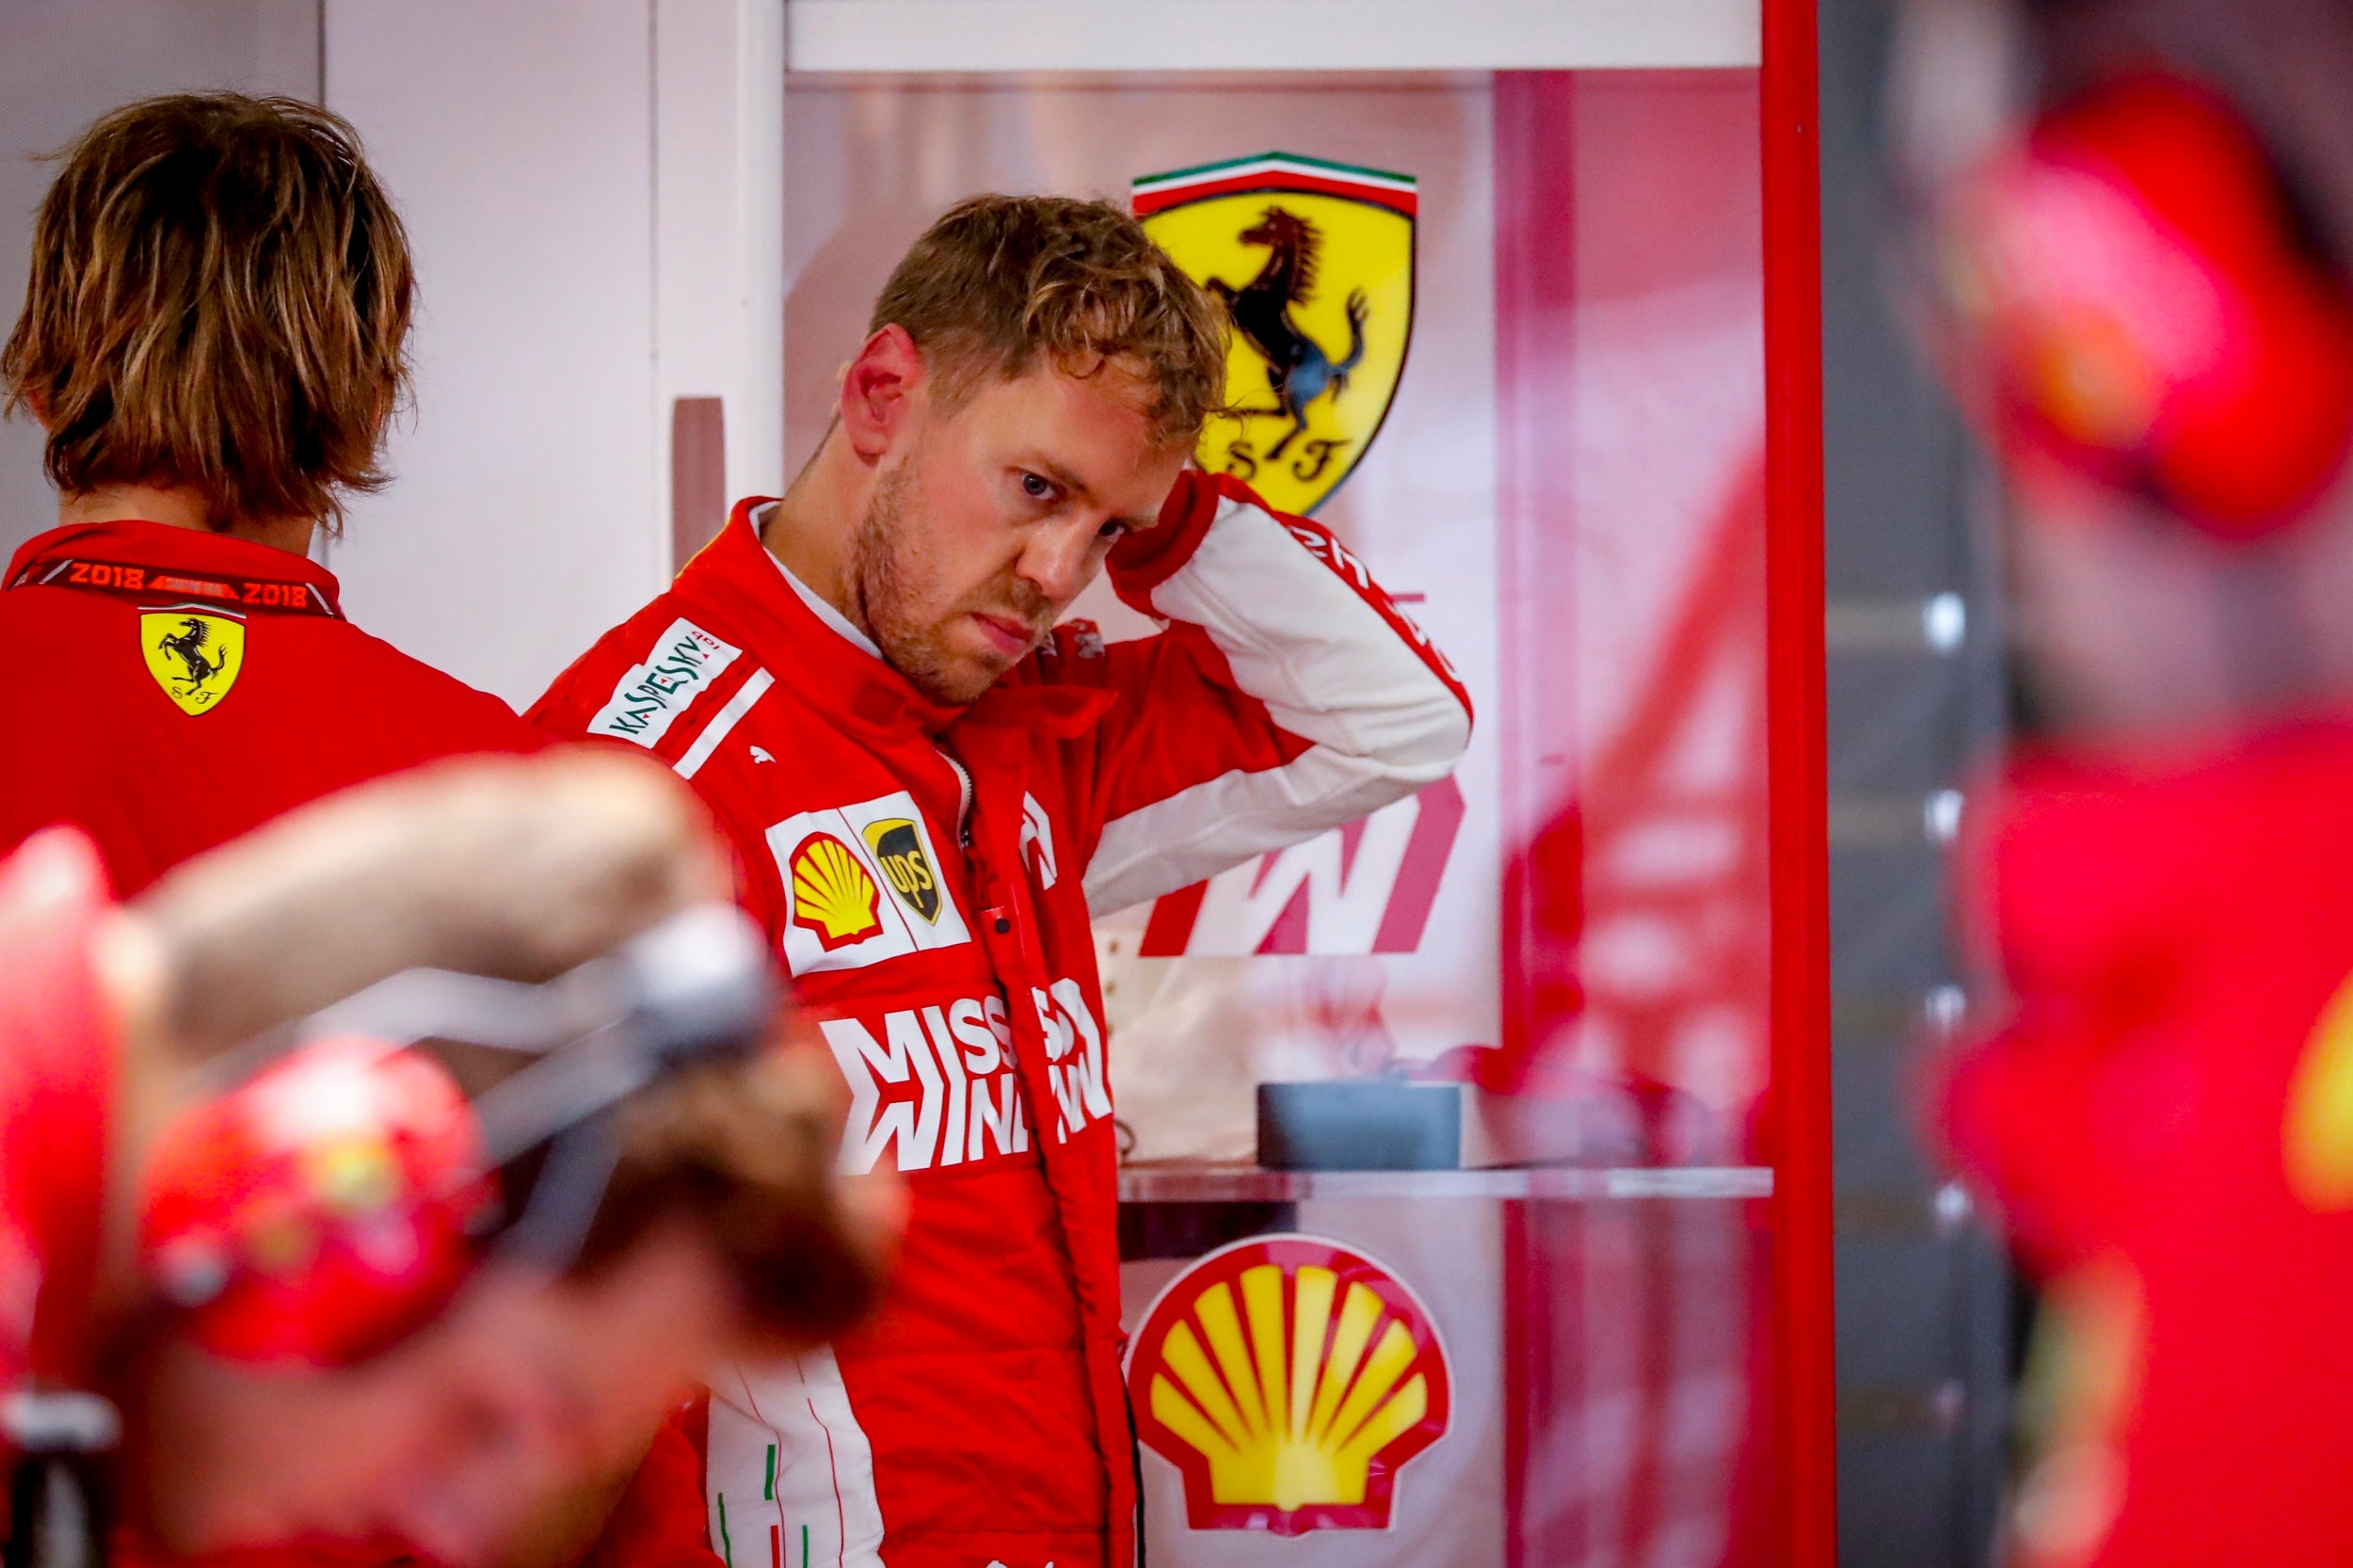 Ferrari's mid-season pace has completely deserted them